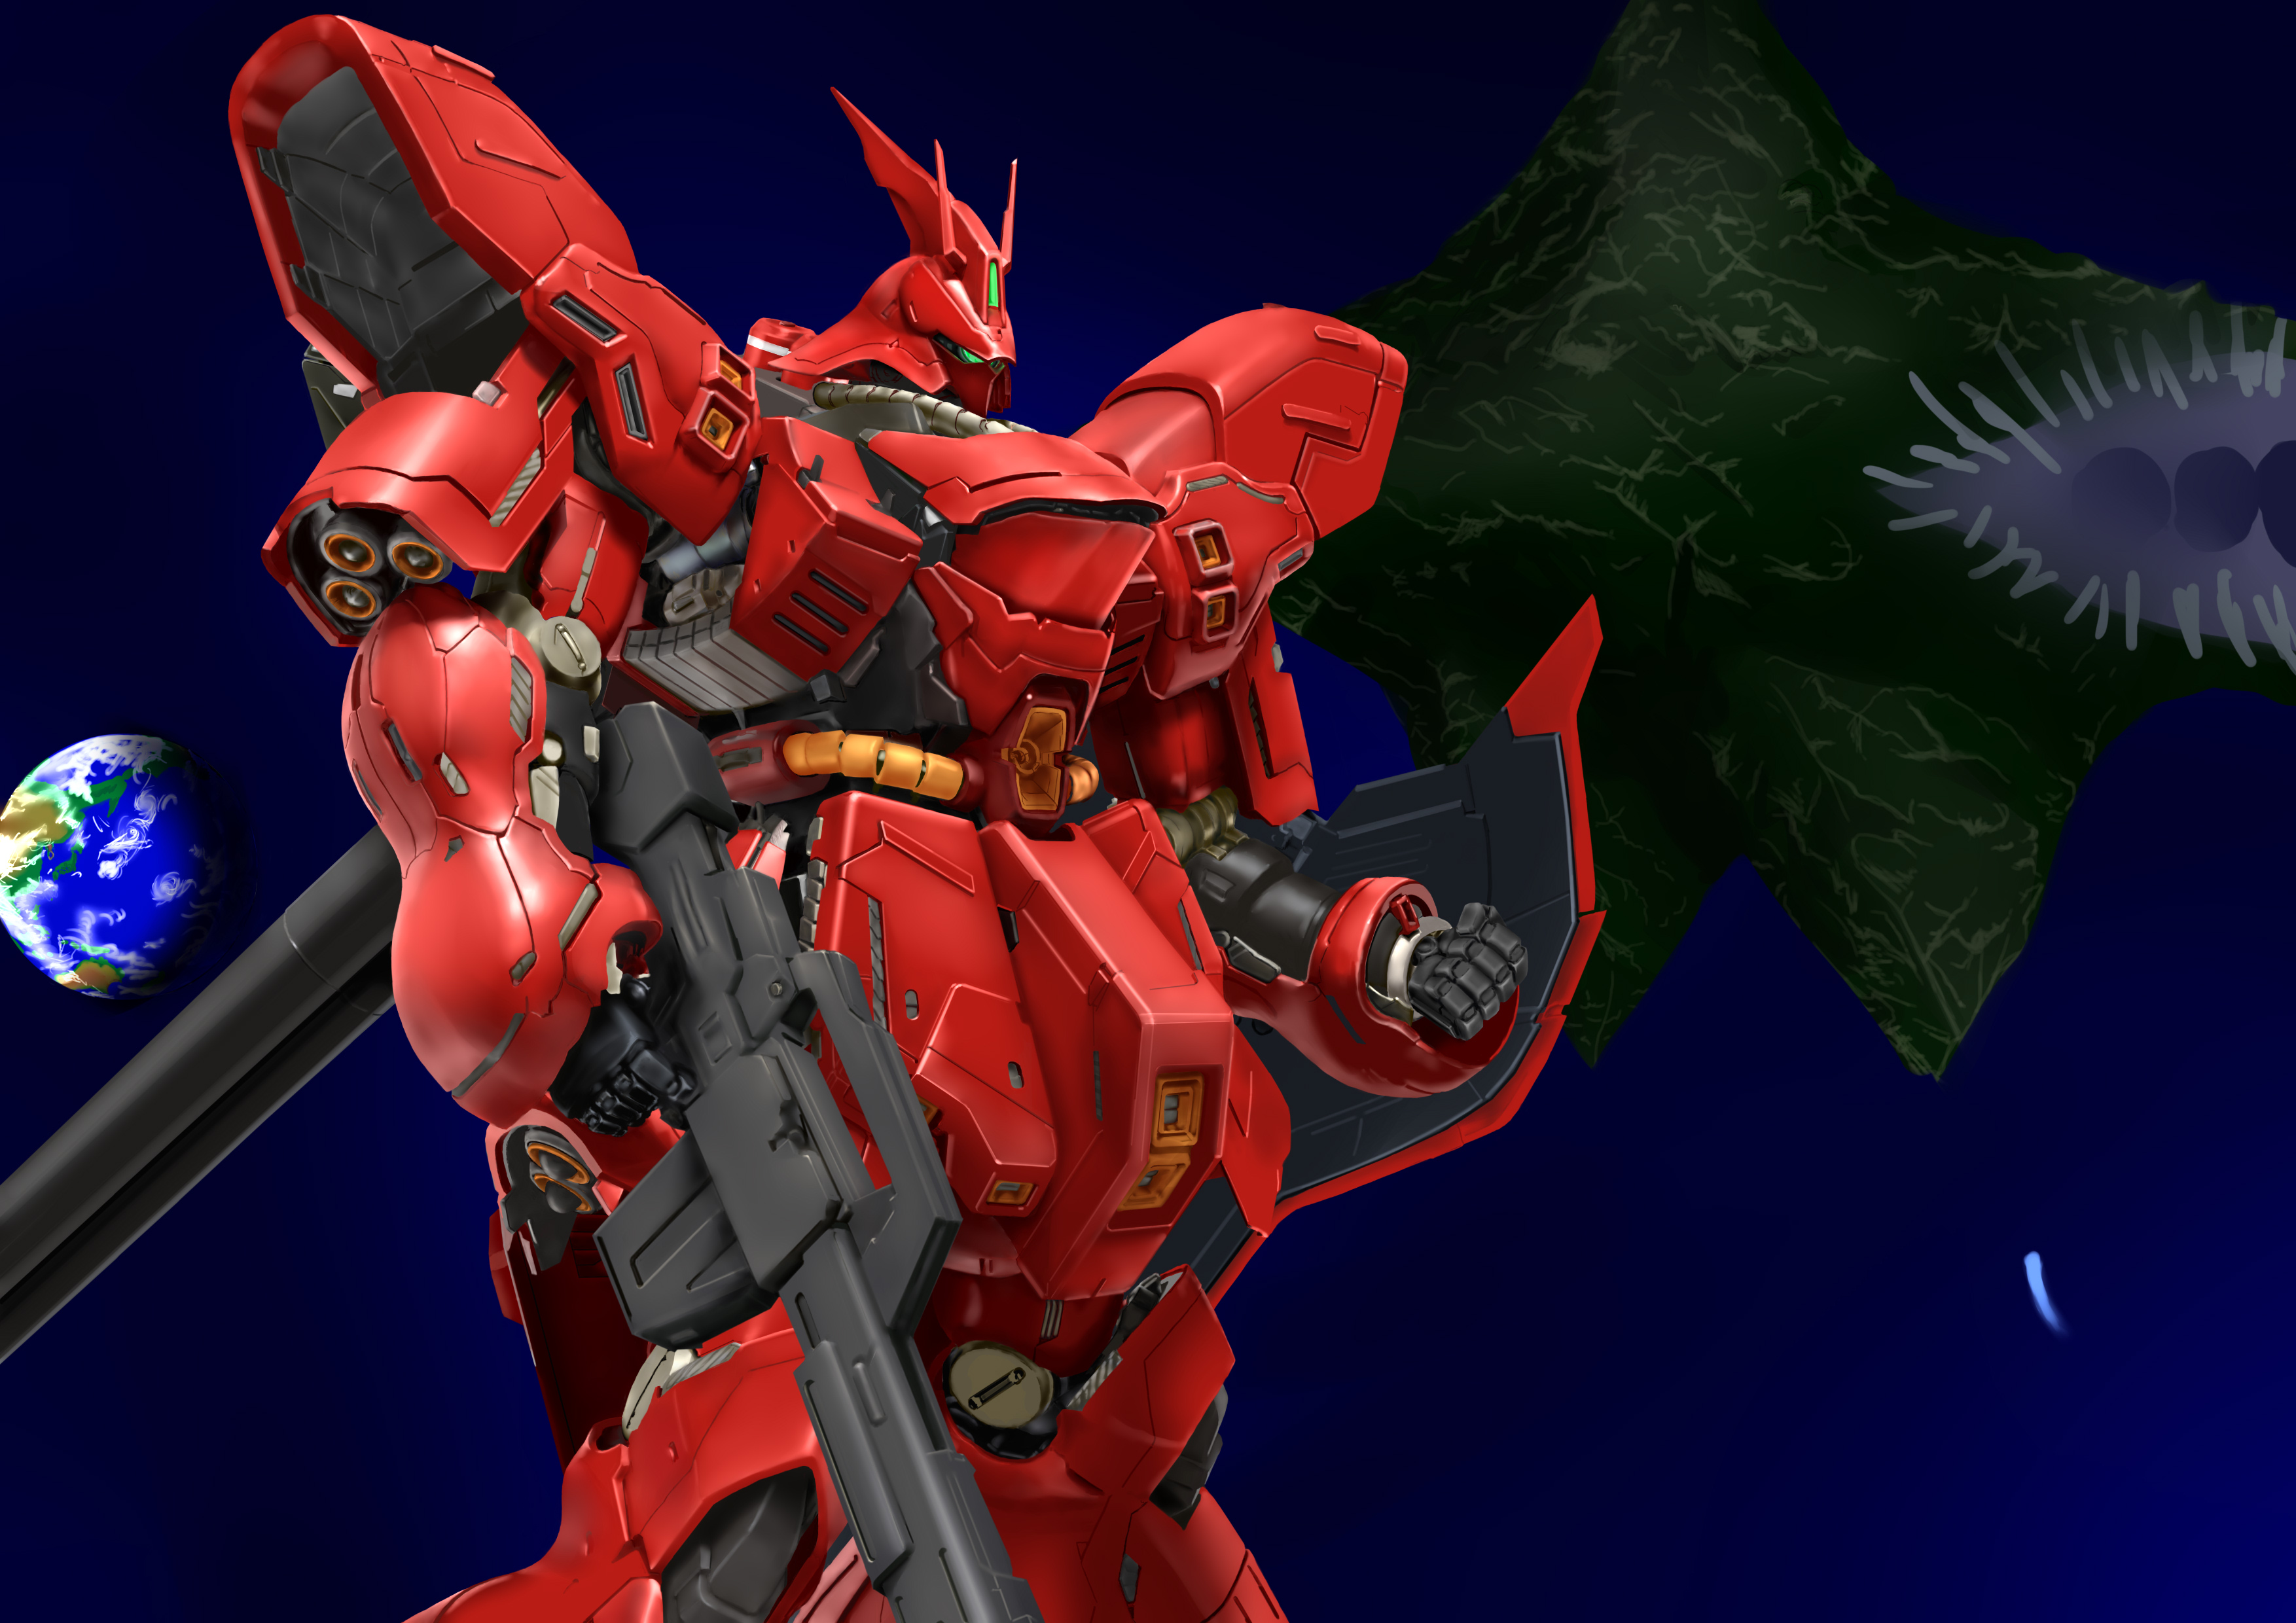 Anime Mechs Mobile Suit Gundam Chars Counterattack Sazabi Mobile Suit Artwork Digital Art Fan Art 3508x2480